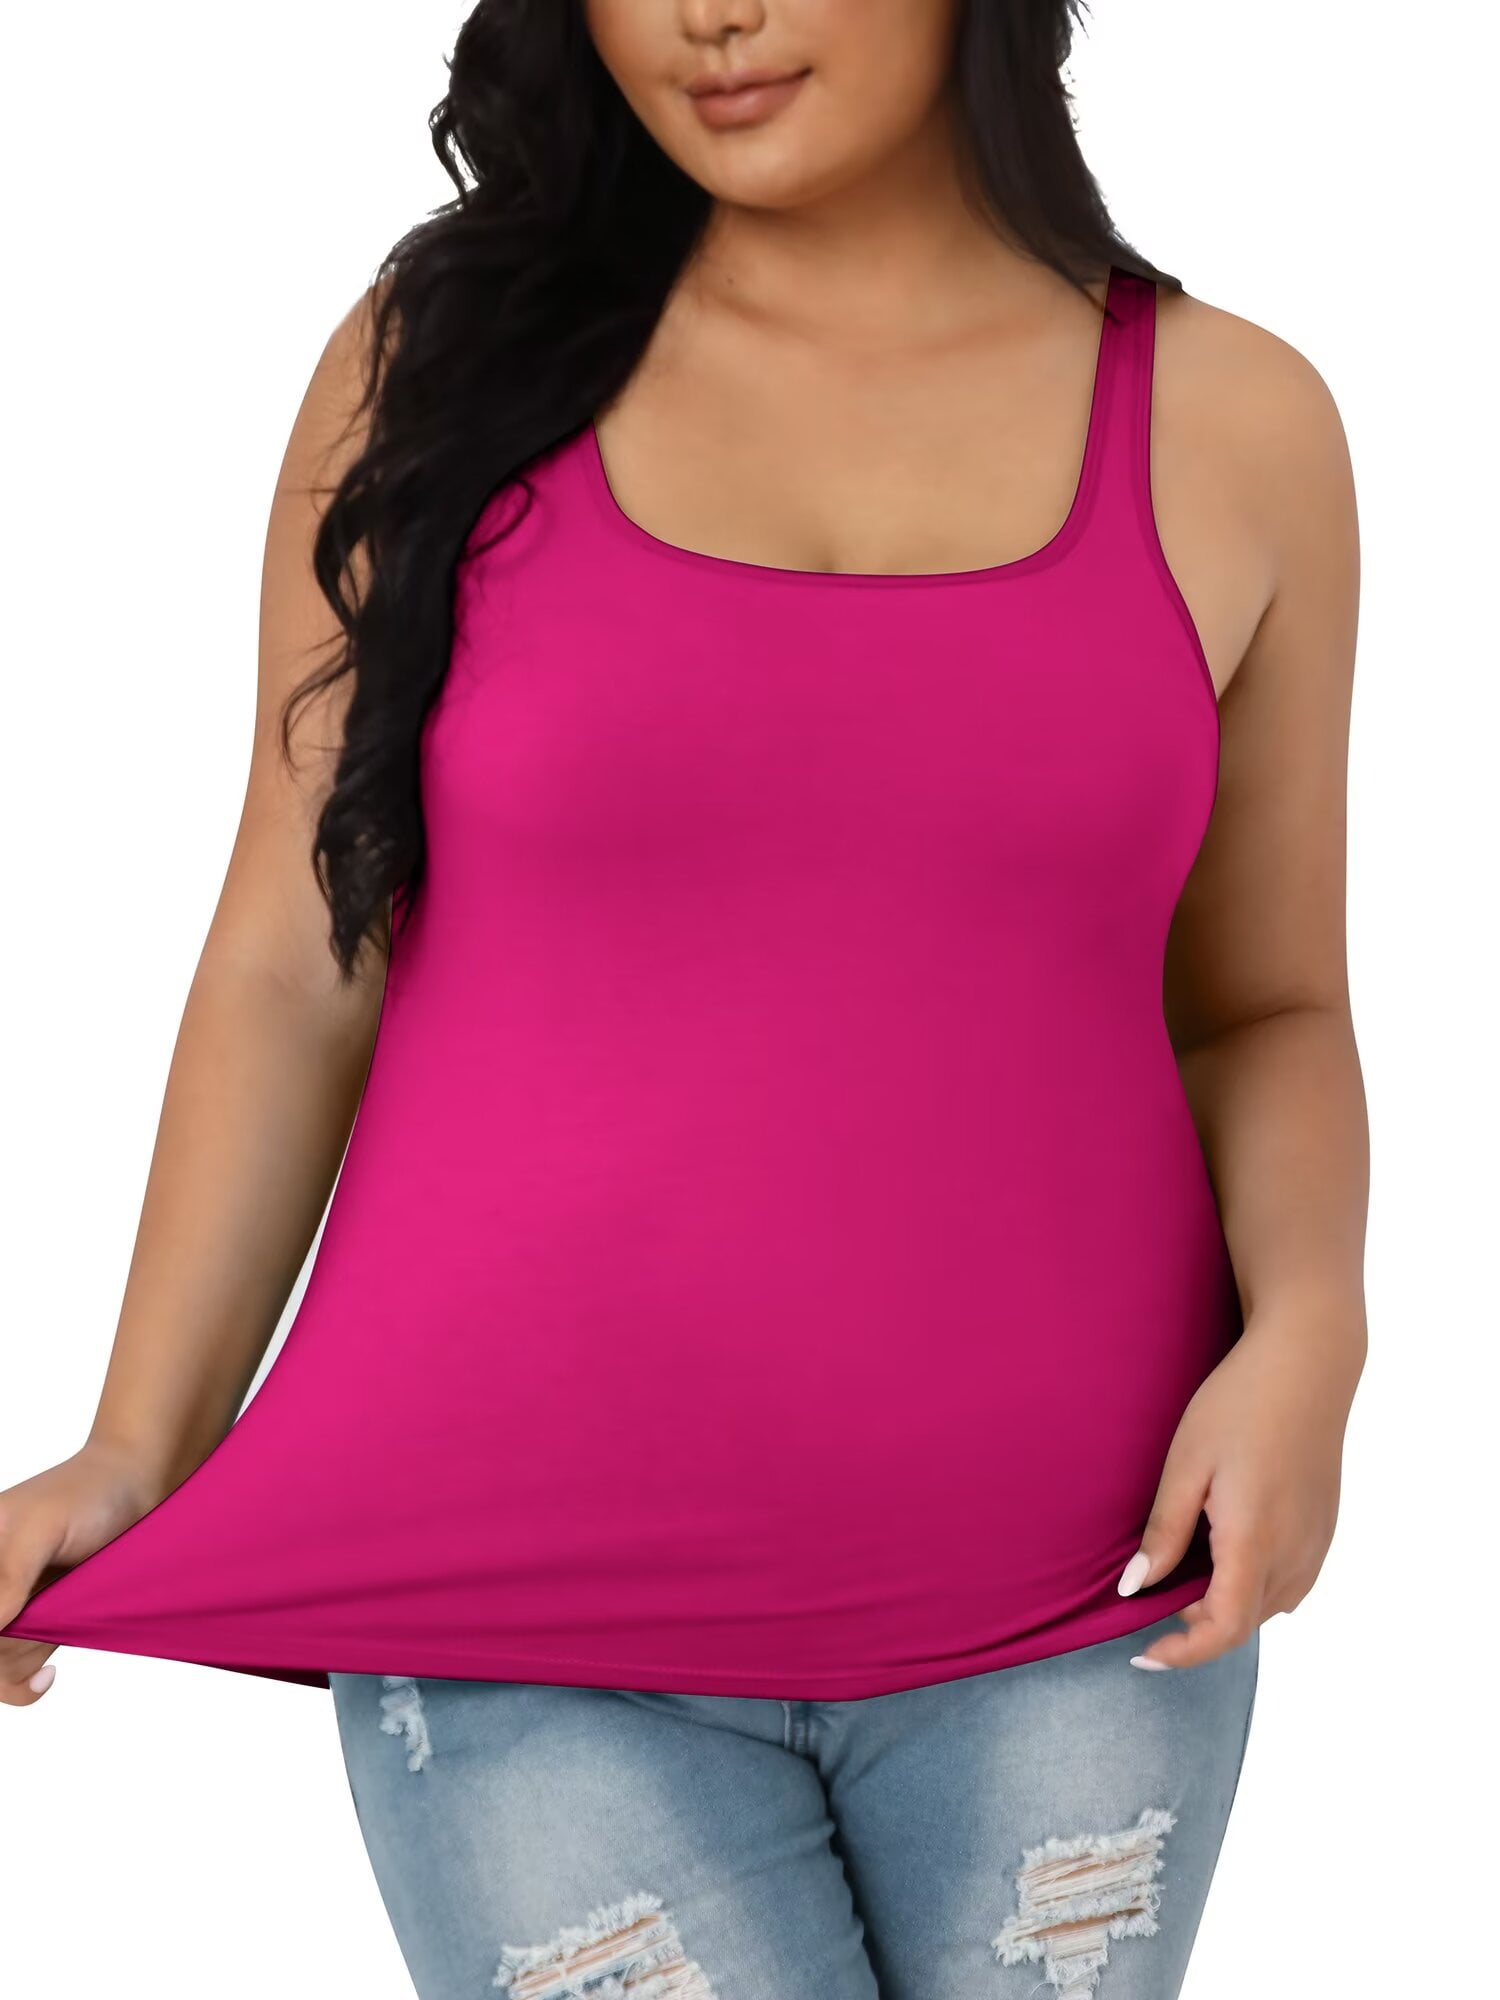 Charmo Women Plus Size Cotton Tank Top with Shelf Bra Adjustable Wider Strap Camisole Basic Undershirt